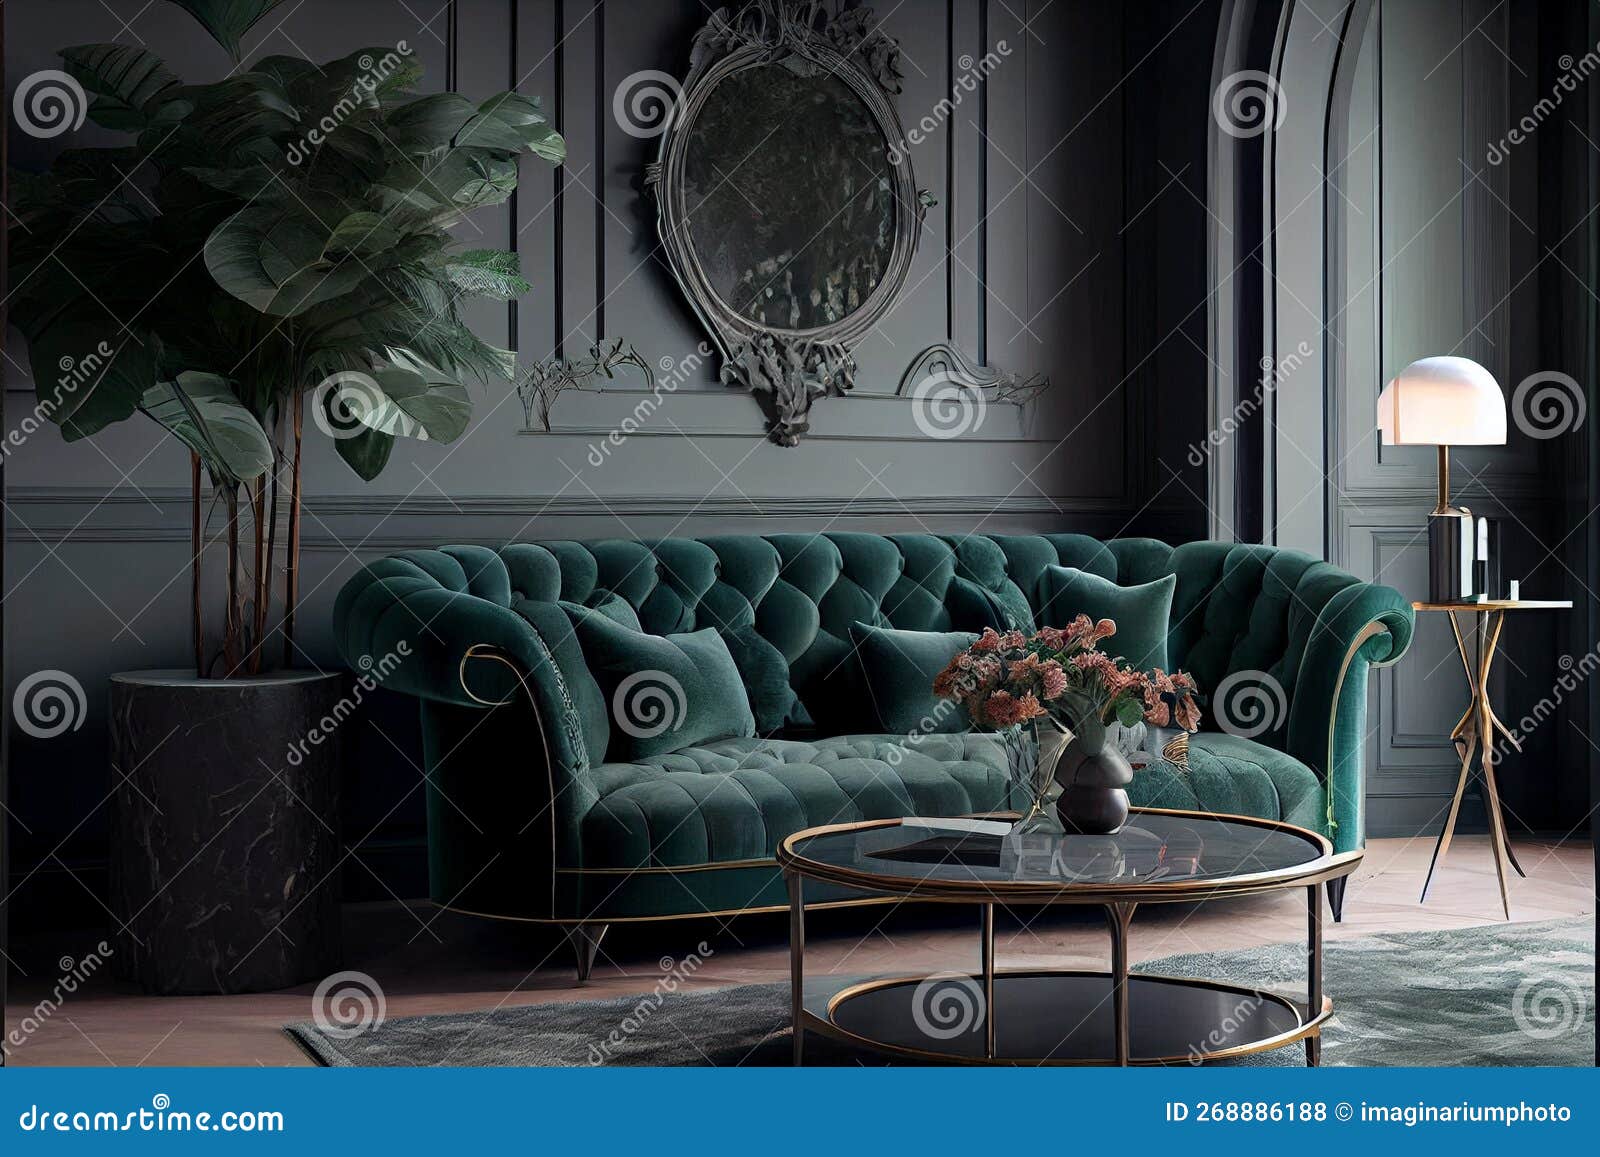 Emerald Green Living Room Interior with Fog Grey Walls. Sofa and ...